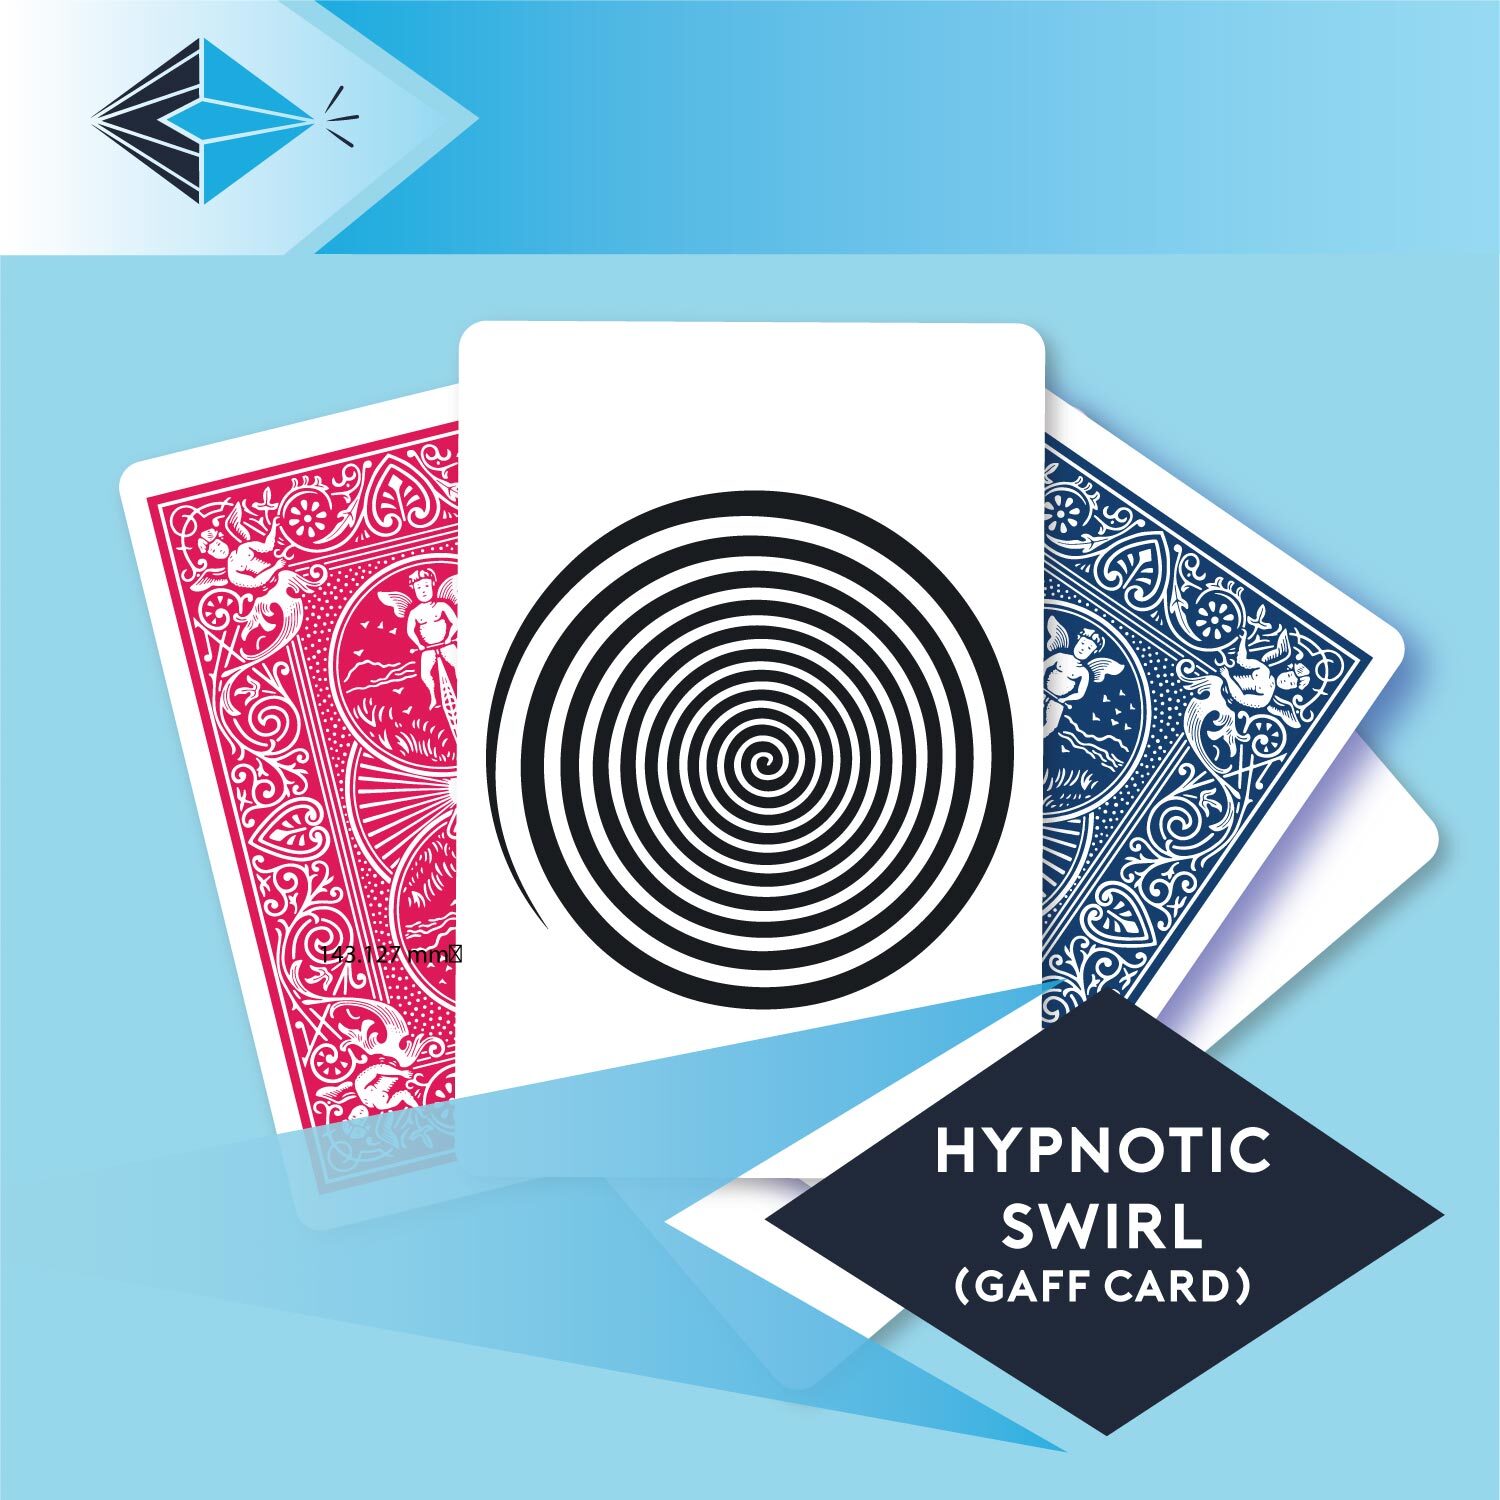 hypnotic swirl gaff card 4 printbymagic magicians gaff cards printers Stockport Manchester UK